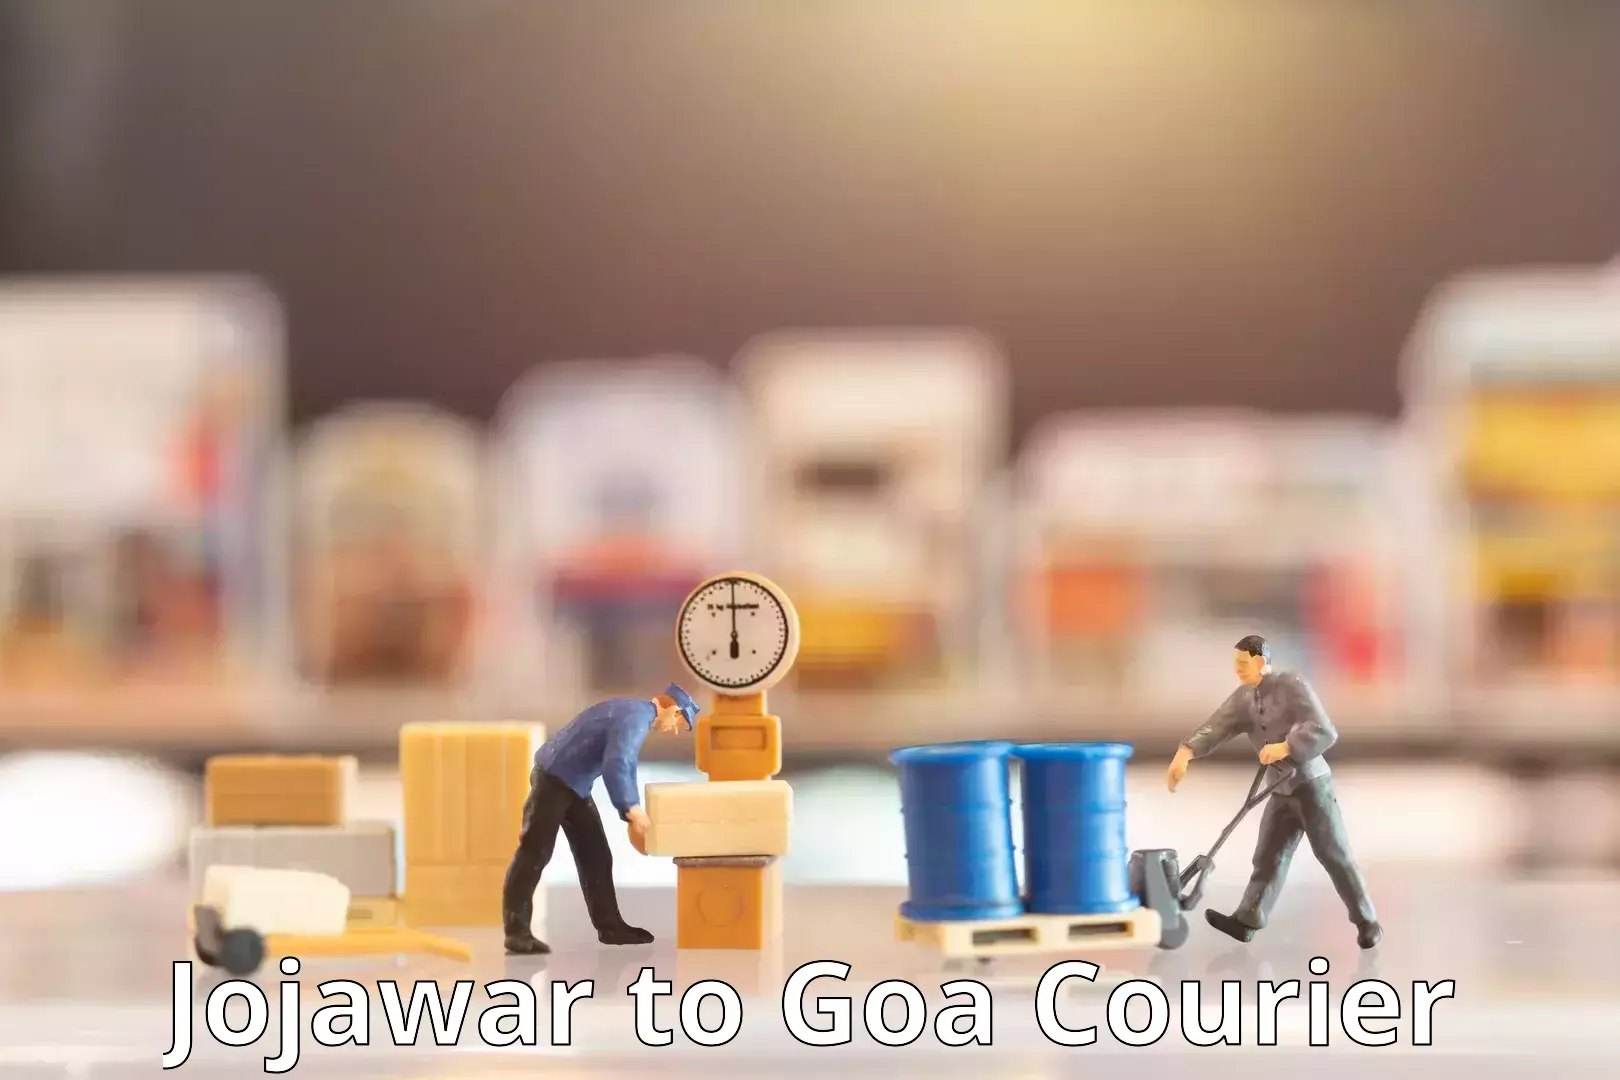 Next-day freight services Jojawar to IIT Goa